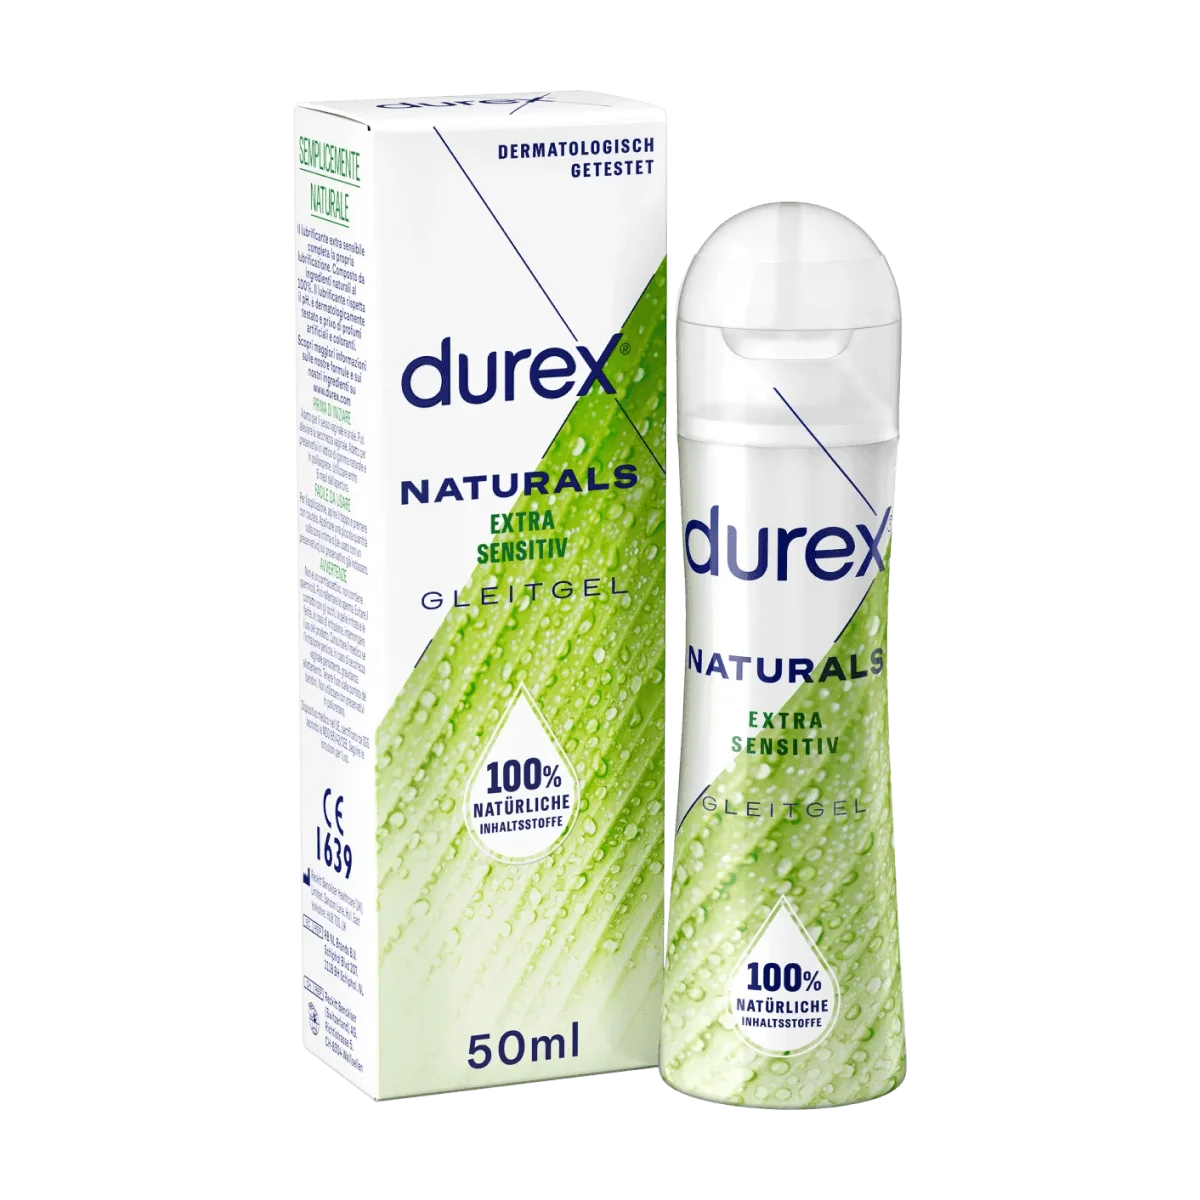 Durex Gleitgel Naturals Extra Sensitive, 50 ml